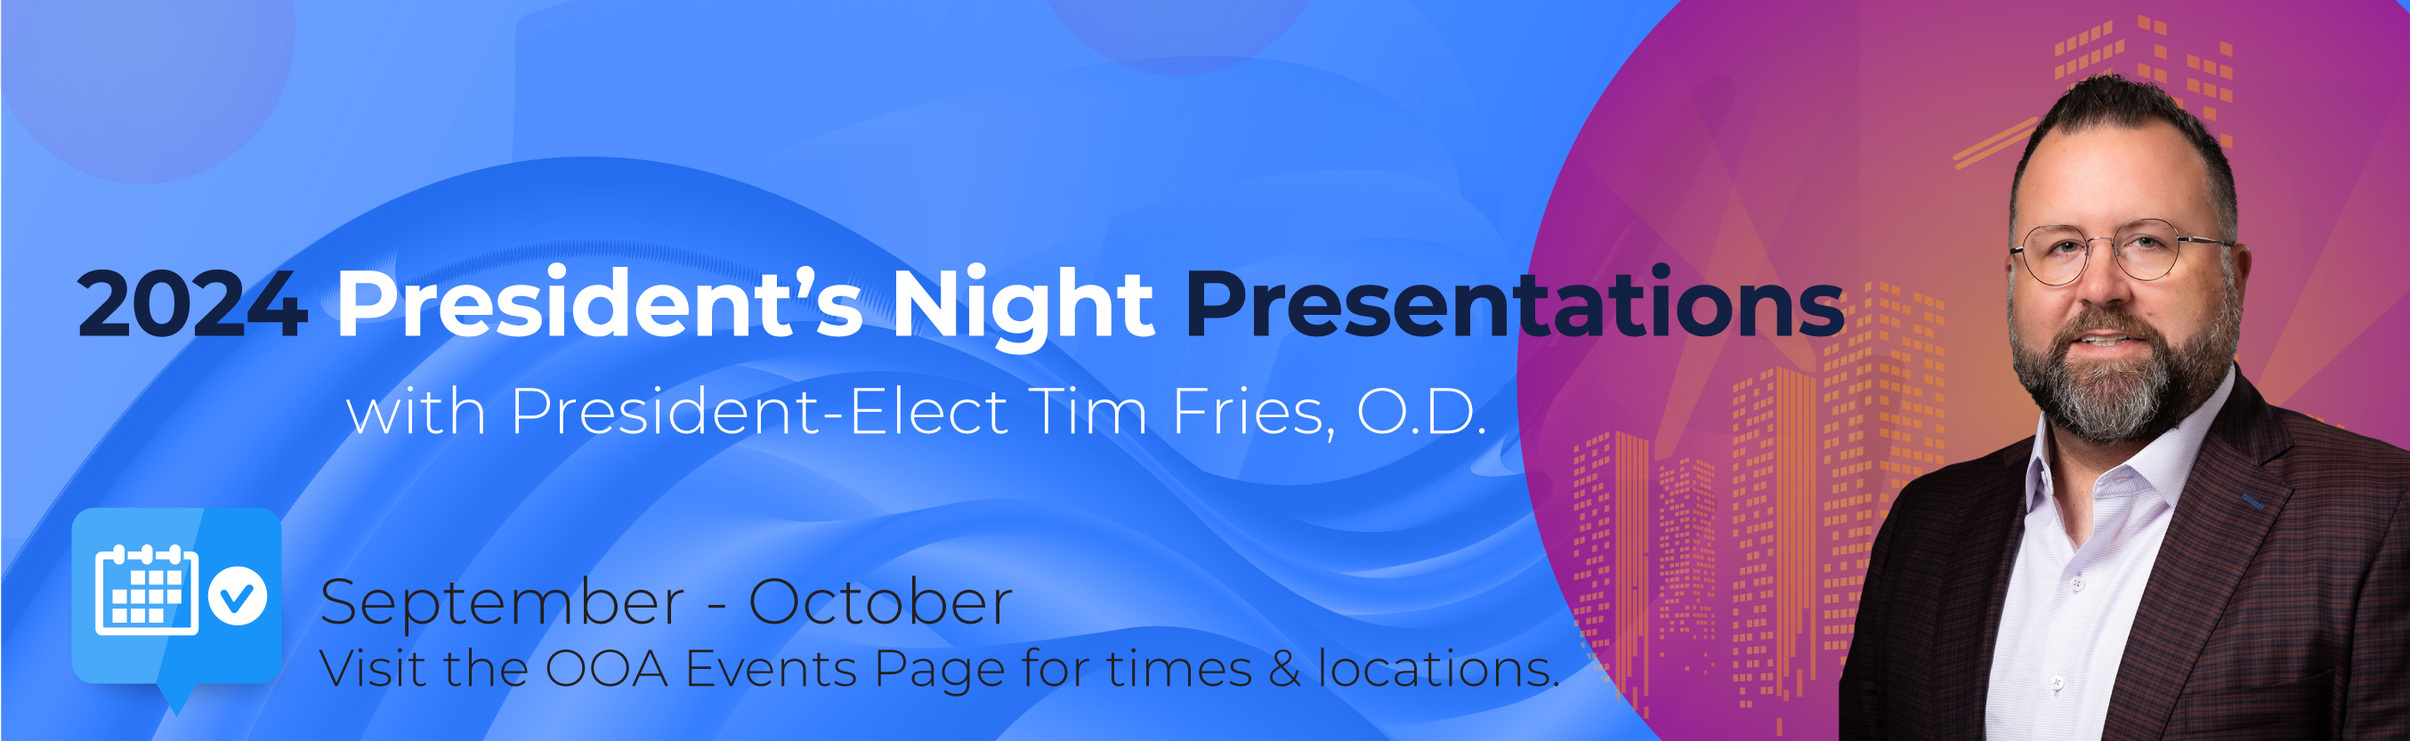 President's Night Fries 1300x400